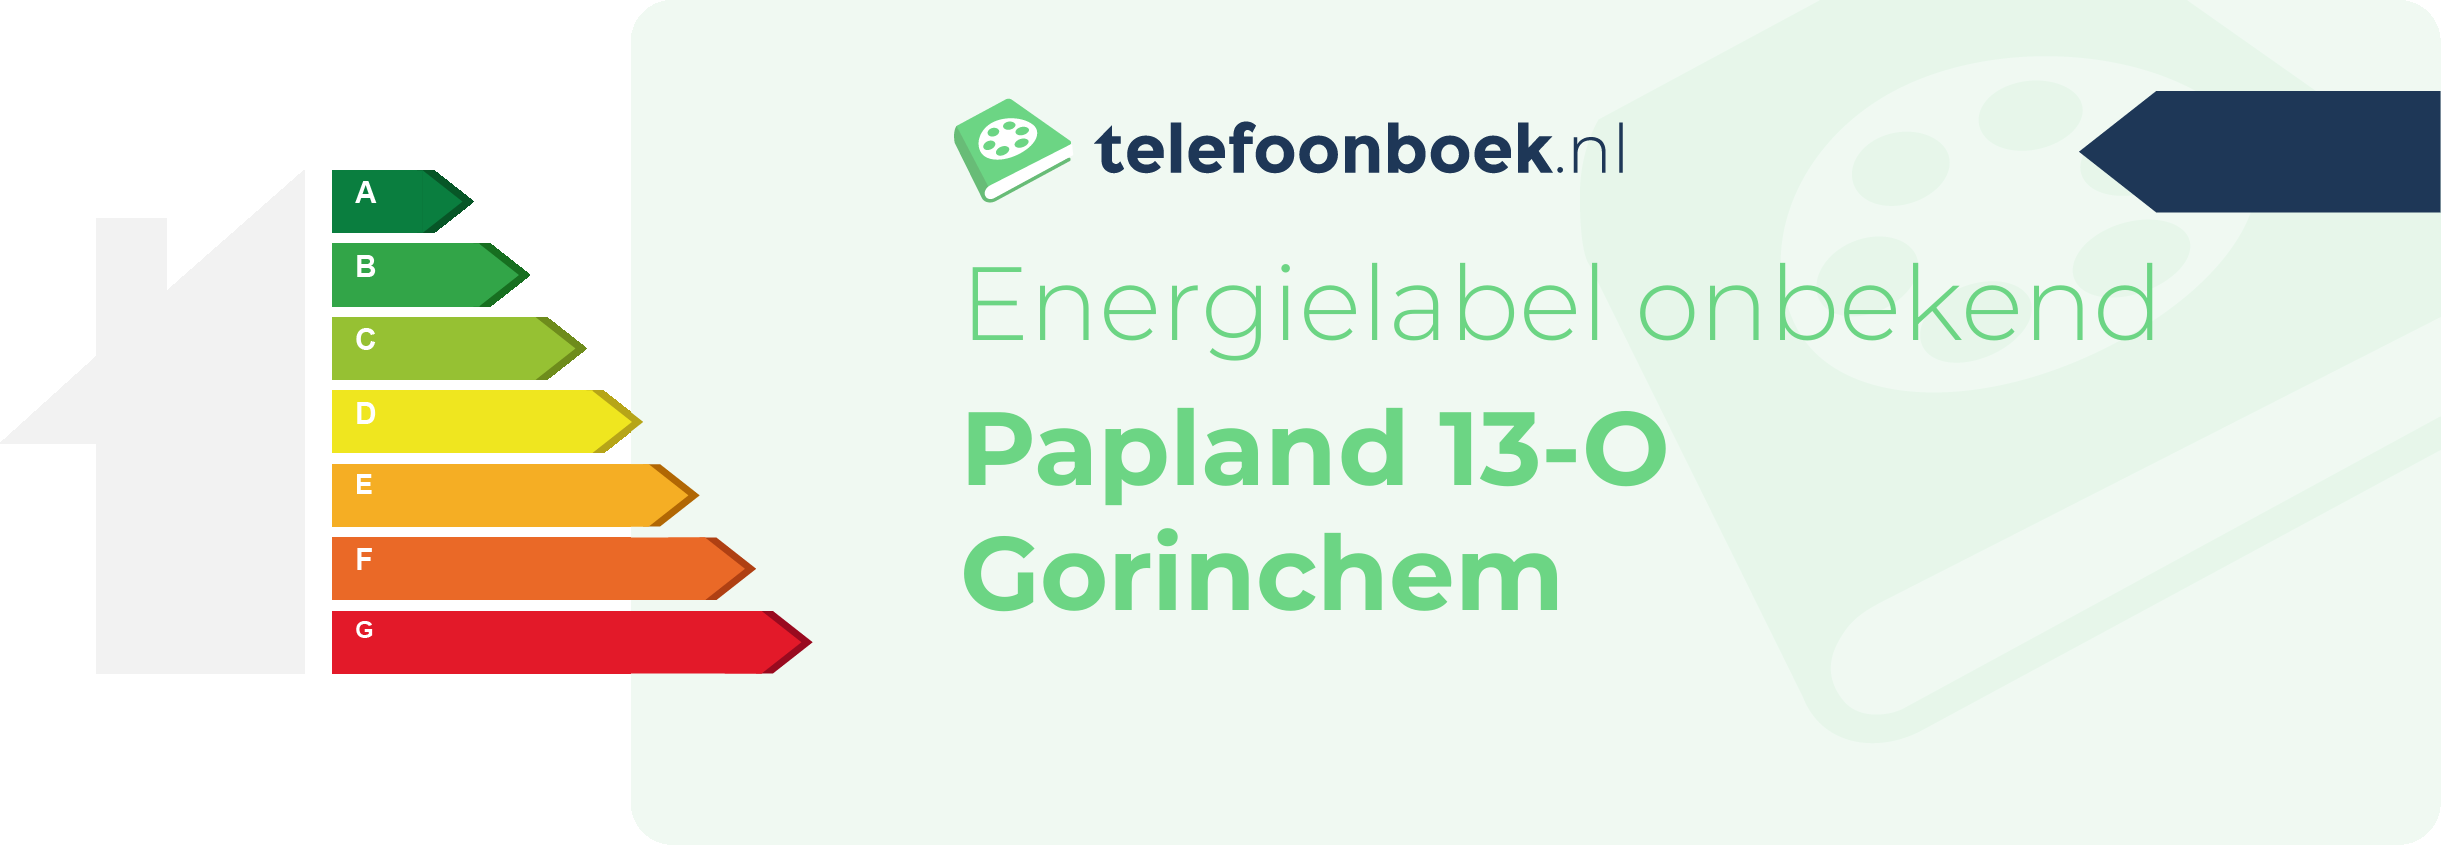 Energielabel Papland 13-O Gorinchem